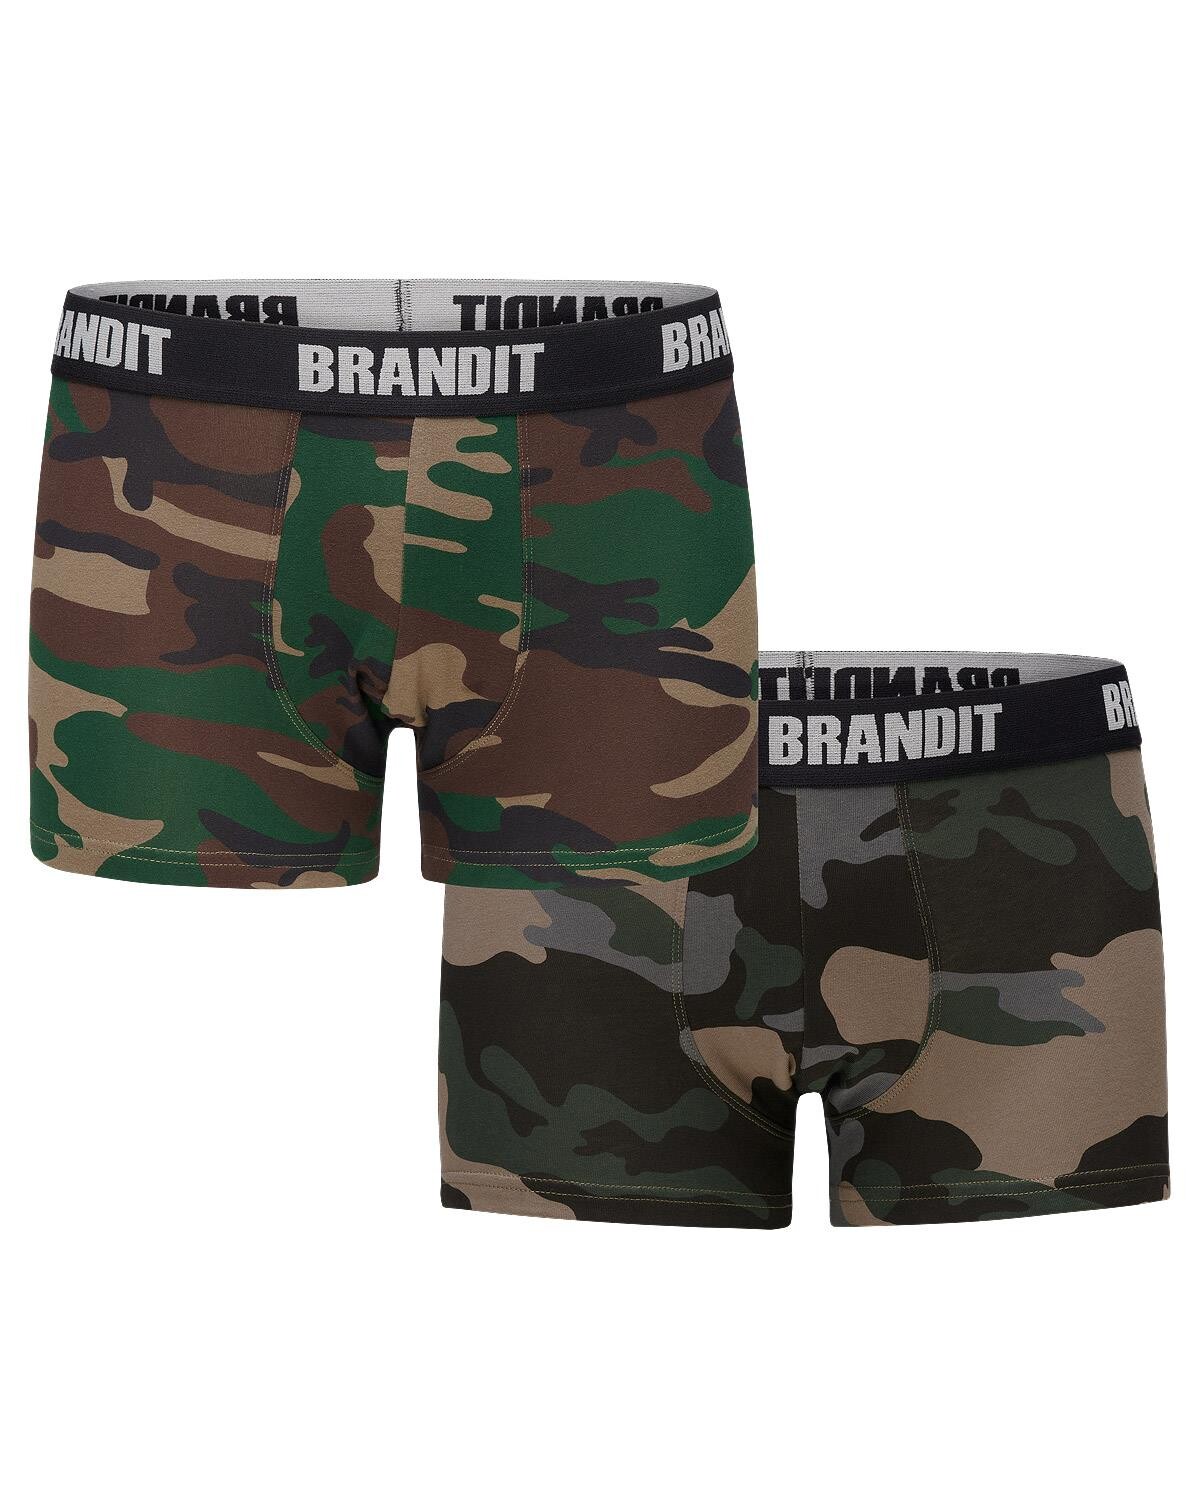 Brandit Boxershorts Logo 2er Pack (Woodland / Dark camo, S)